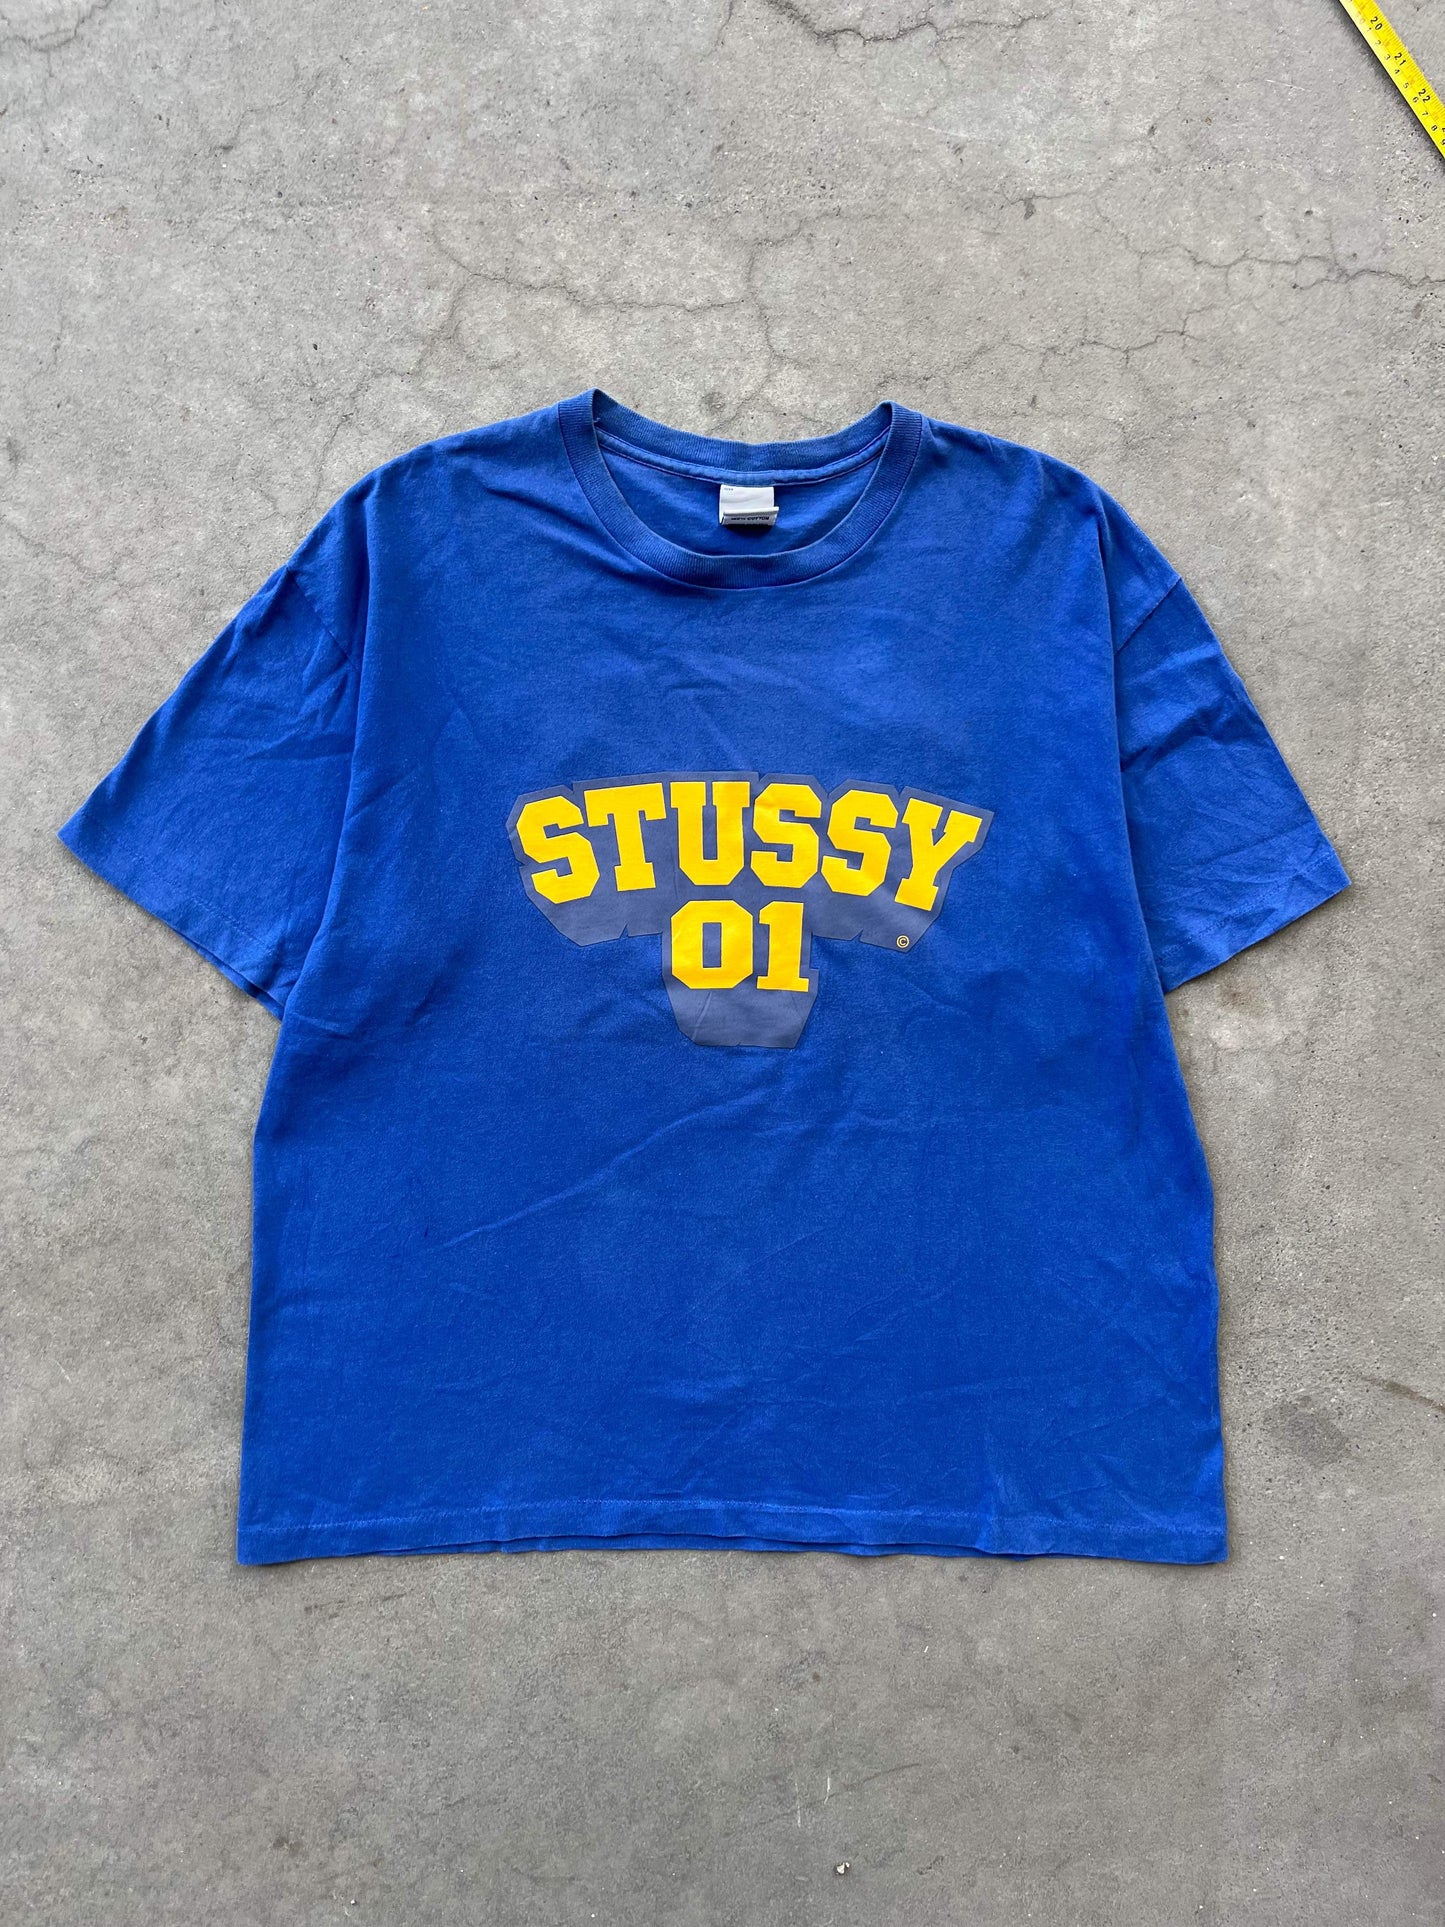 (XL) 90’s Stussy 01 Tee